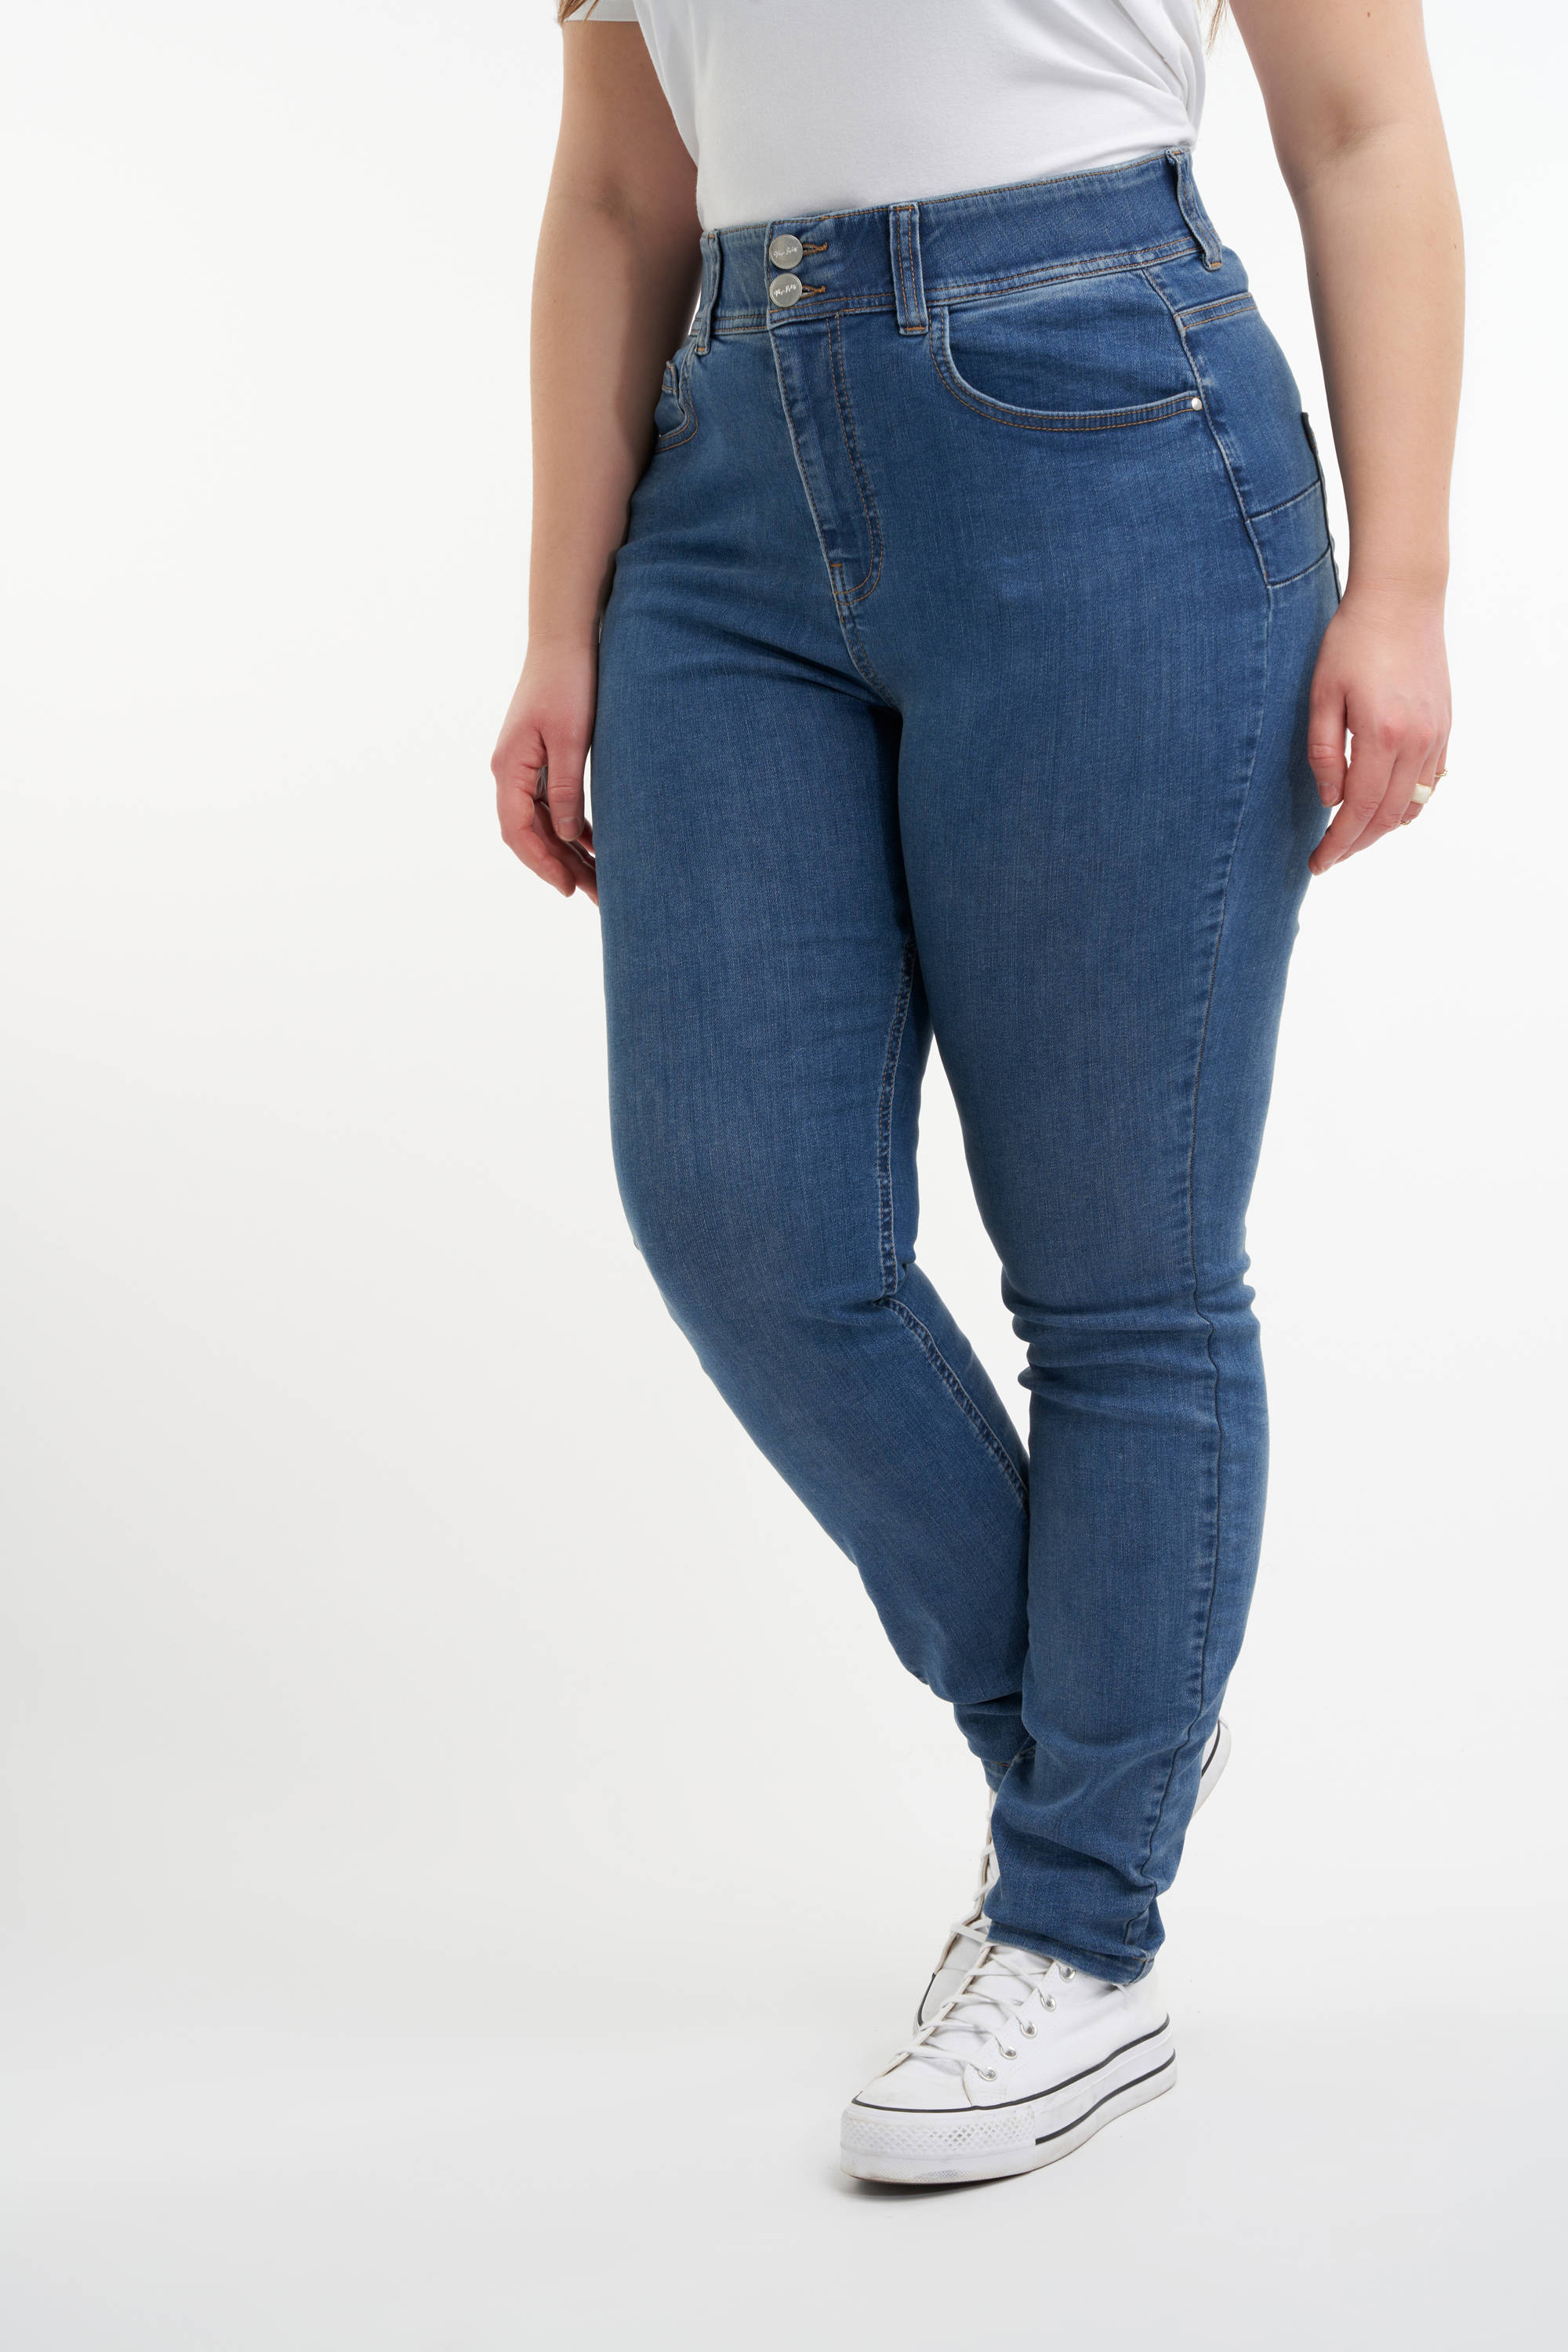 ≥ Ms Mode lily slim leg jeans maat 44 — Spijkerbroeken en Jeans Kleding Dames Spijkerbroeken en Jeans 